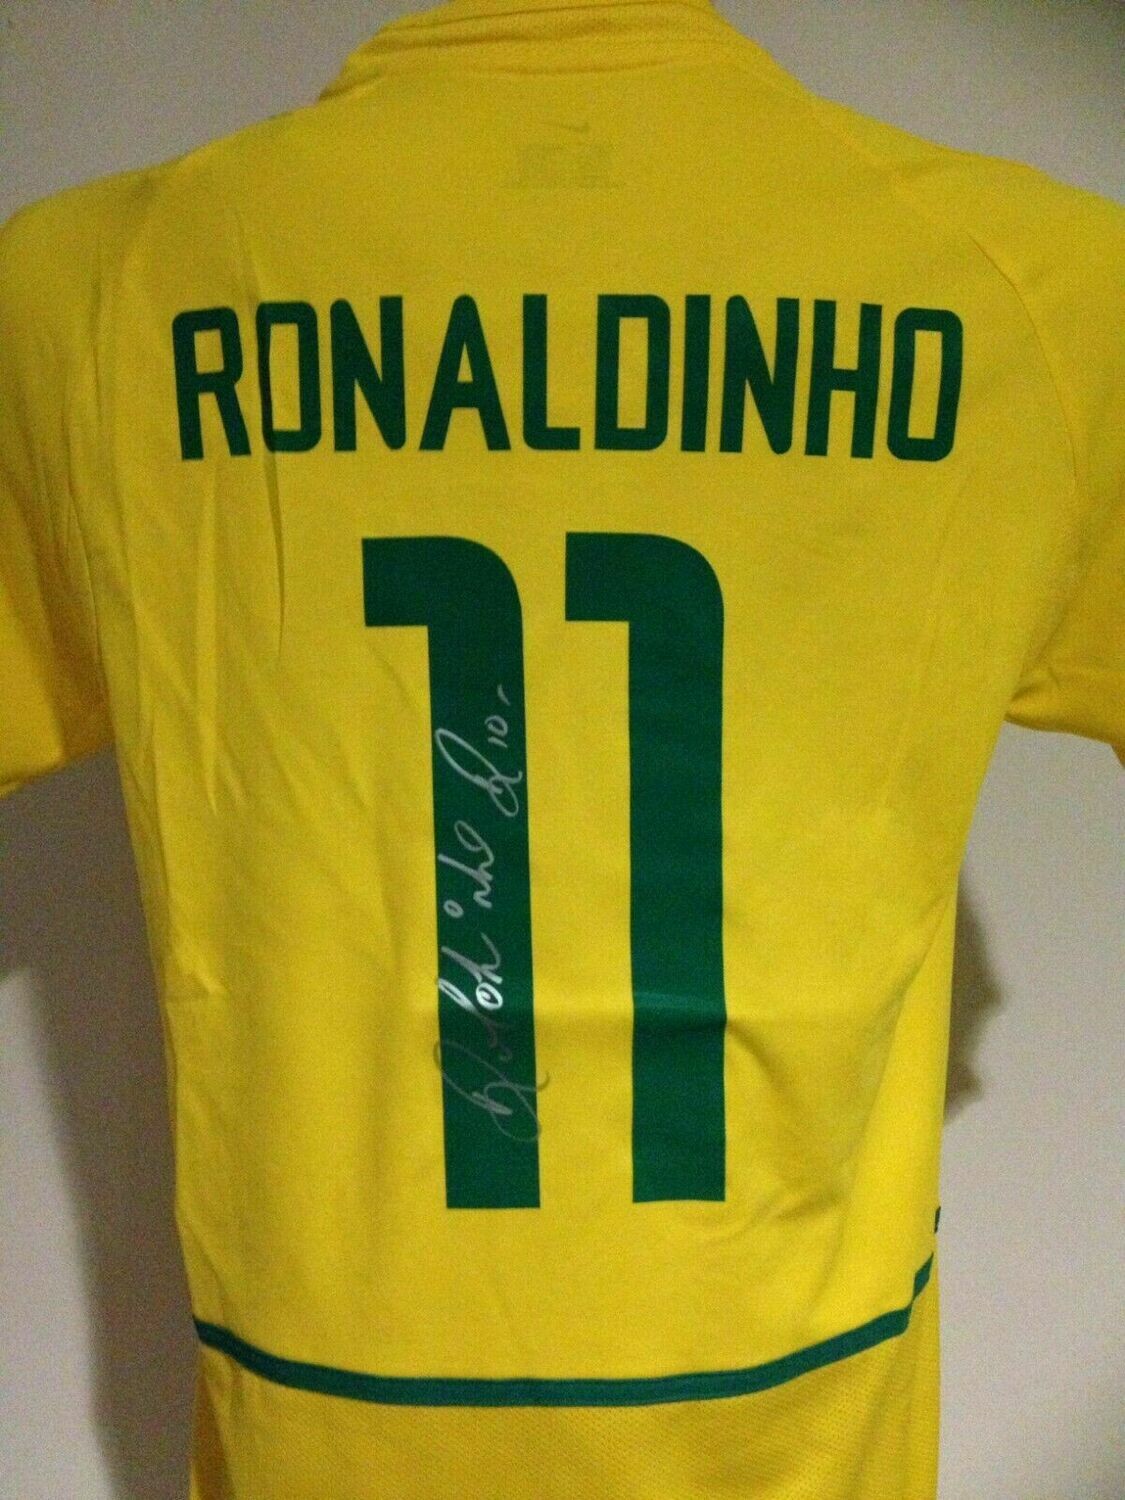 Brasile  Autografata da Ronaldo de Assis Moreira Ronaldinho con certificato di autenticita' Signed From Ronaldo de Assis Moreira Ronaldinho with certificate coa of authetincitiy